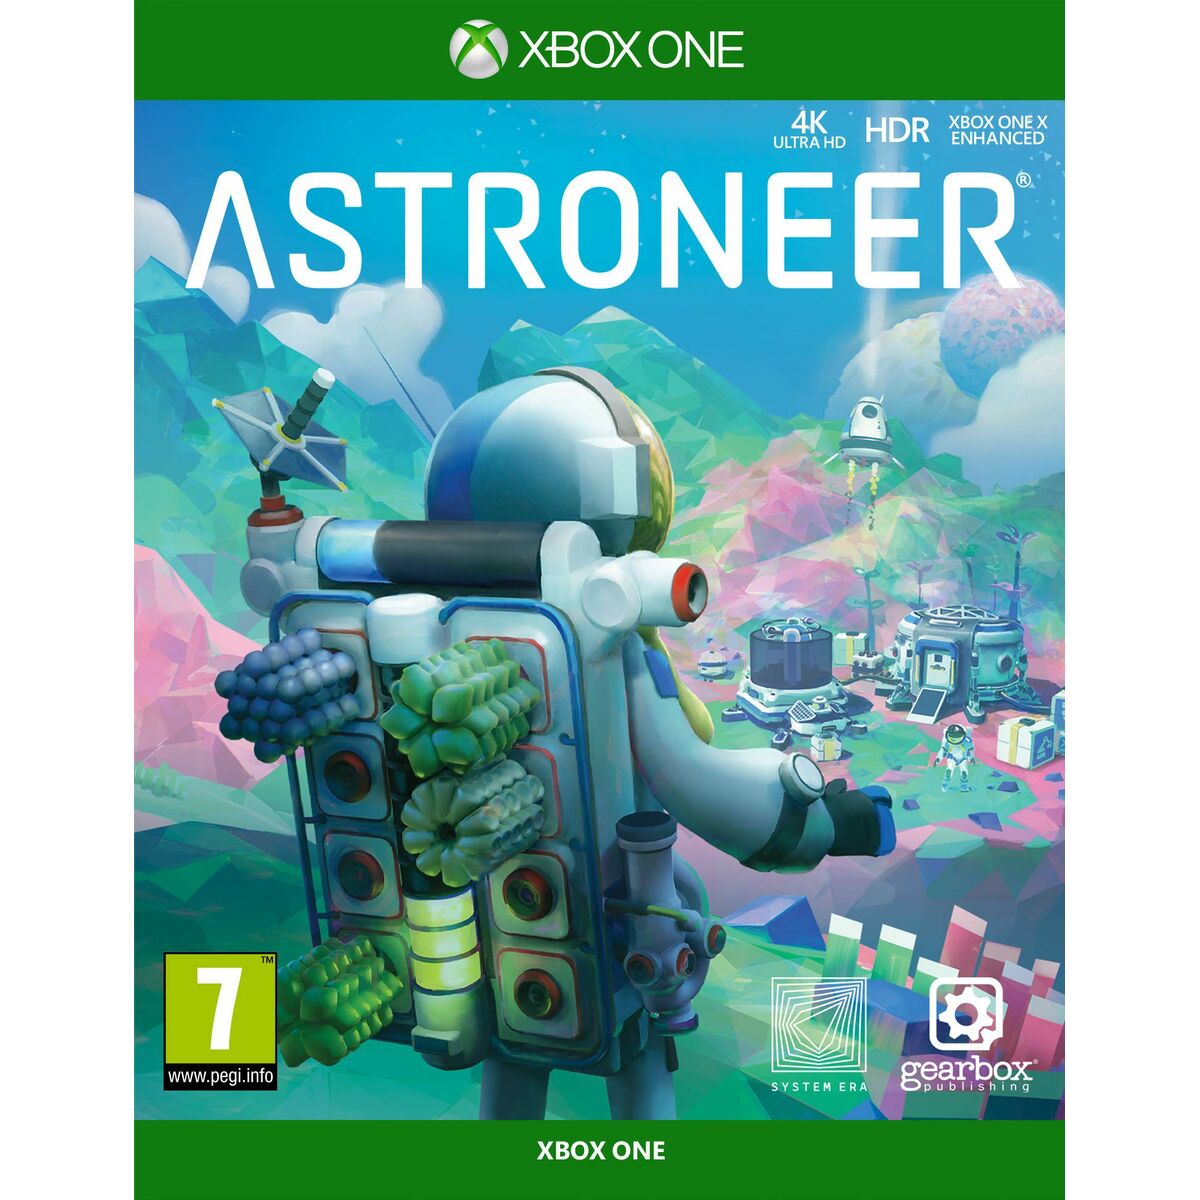 Jeu vidéo Xbox One Meridiem Games Astroneer